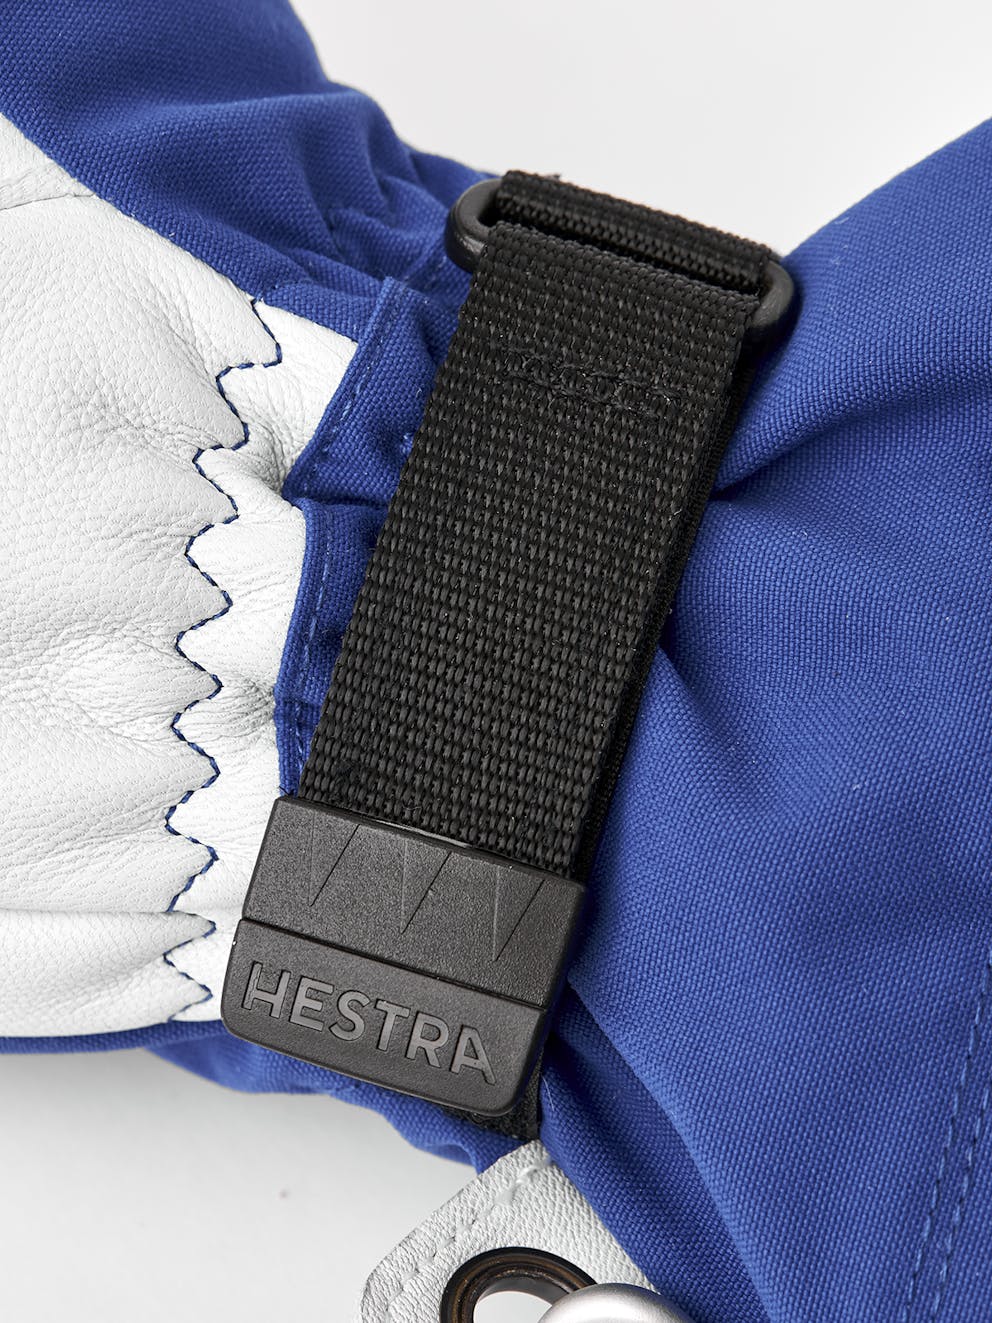 Luxusgüter Army Leather Heli Ski | Gloves - Hestra blue Royal